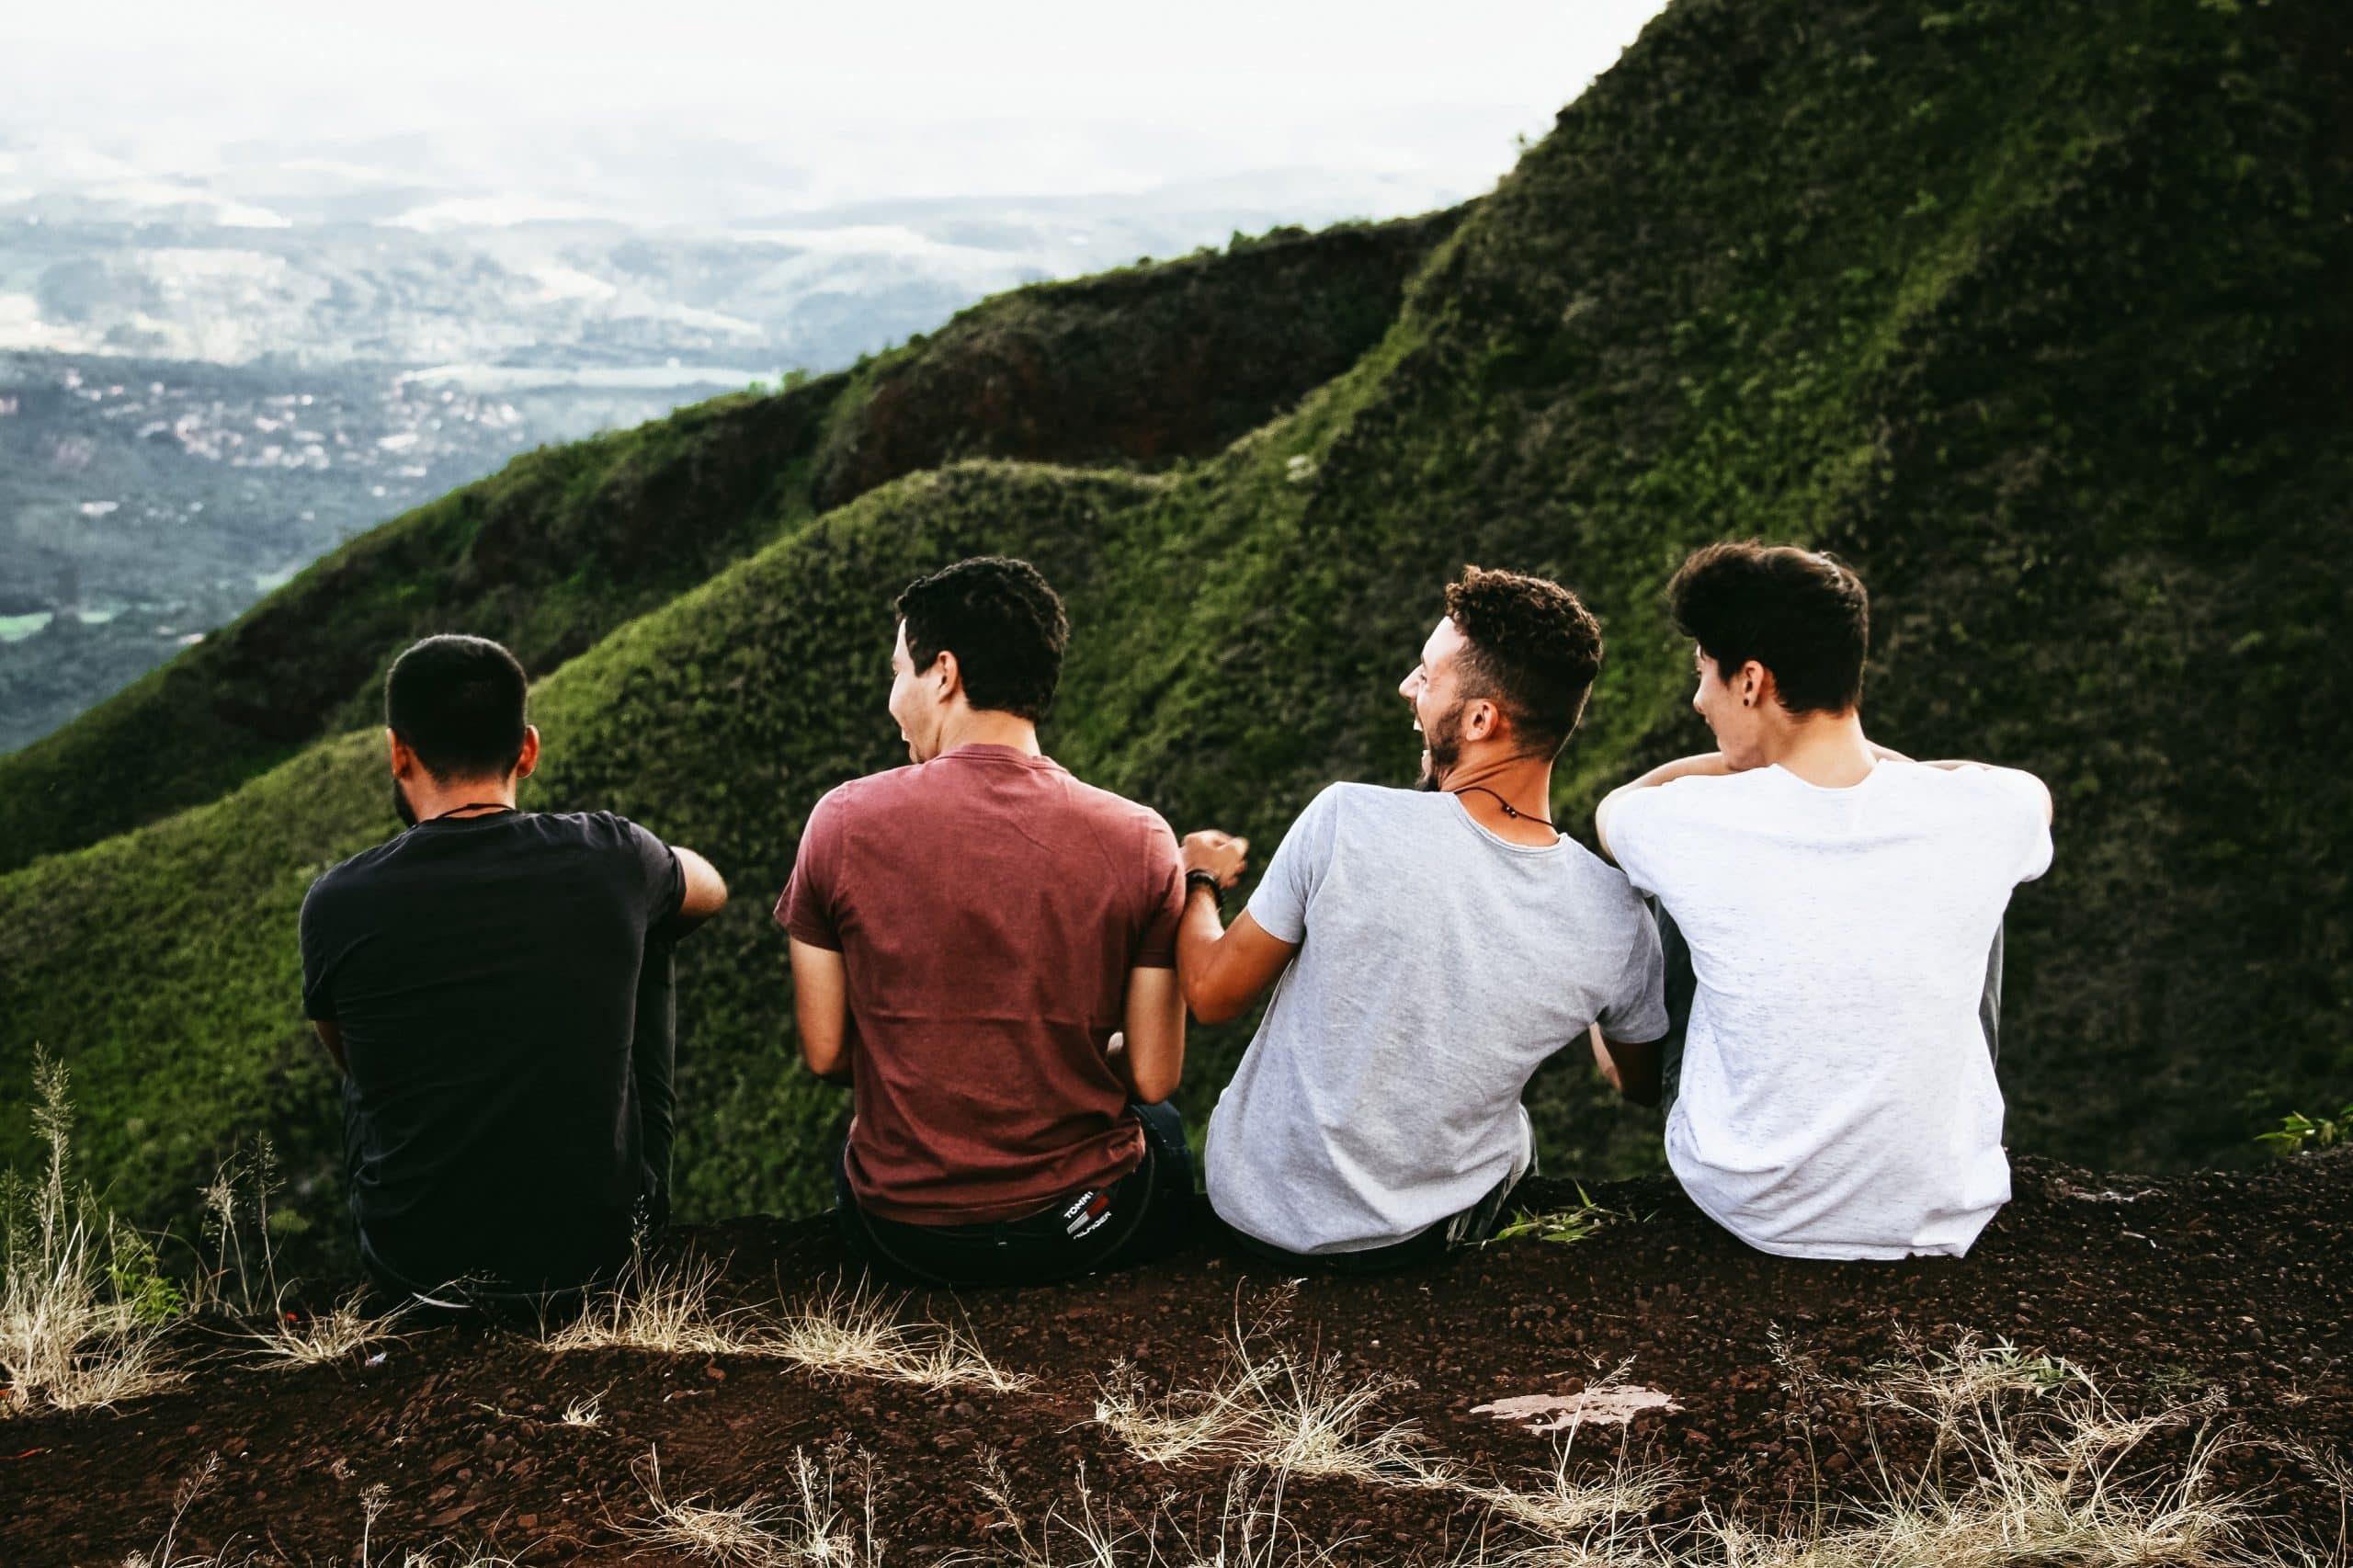 4 Great Biblical Benefits of Friendship